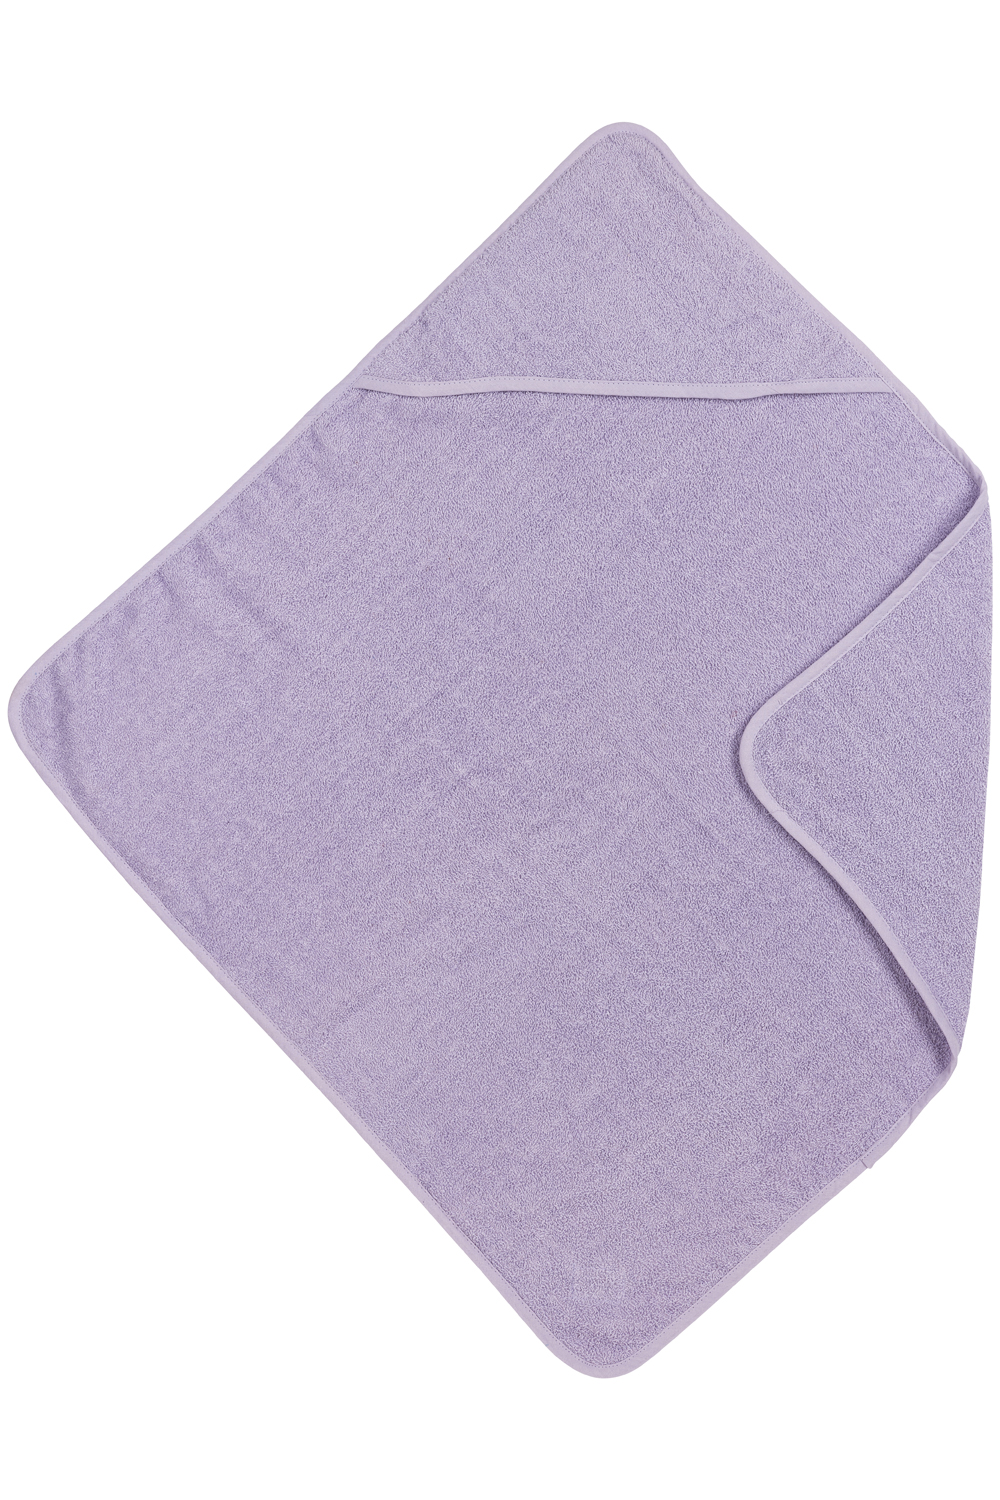 Bathcape terry Uni - soft lilac - 75x75cm